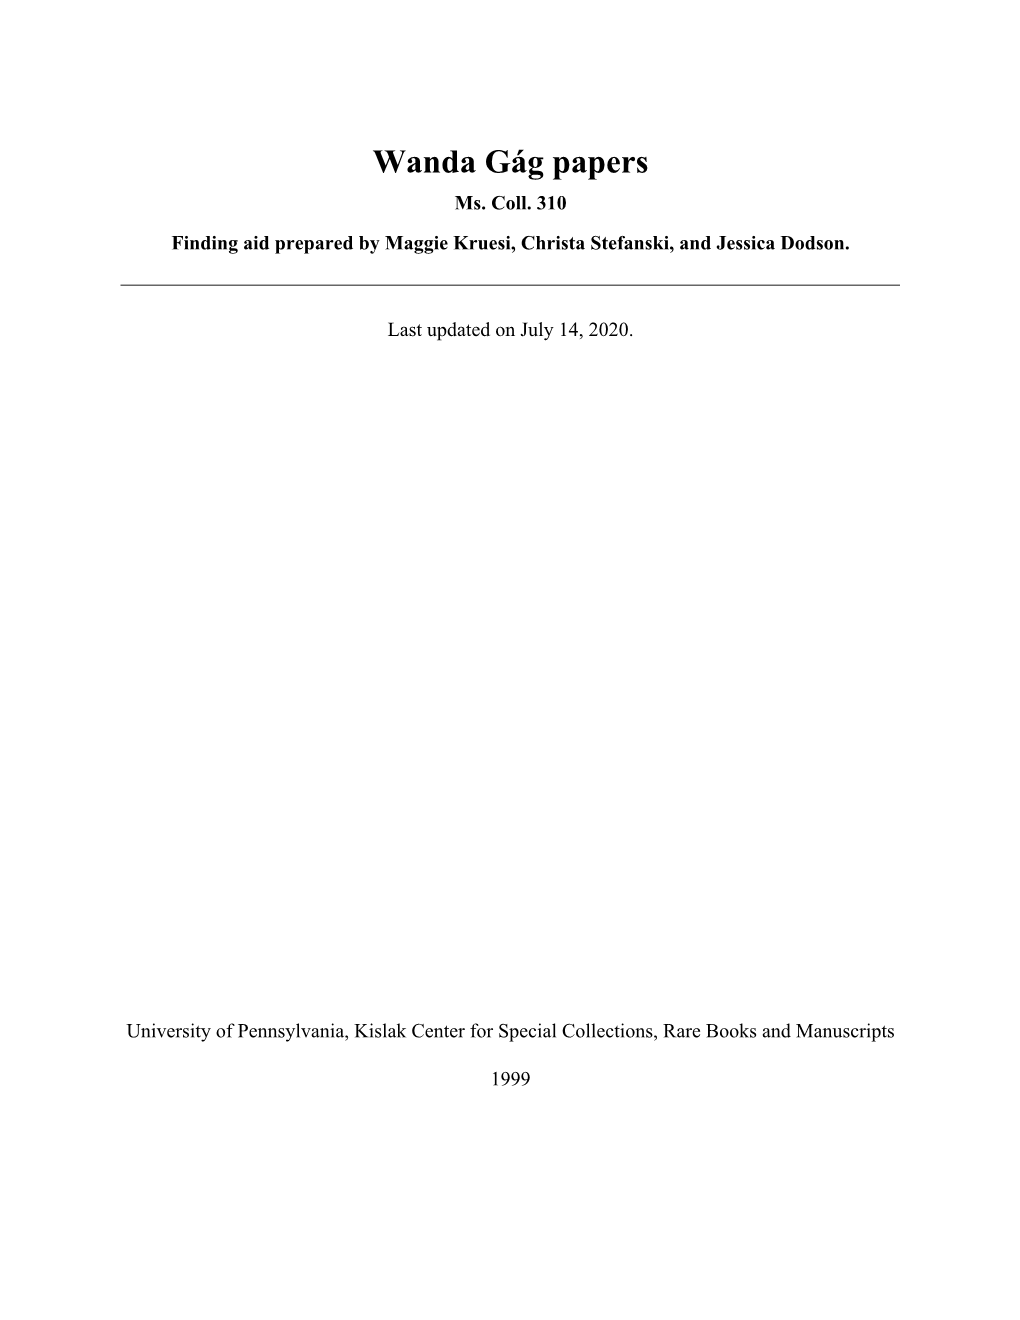 Wanda Gág Papers Ms